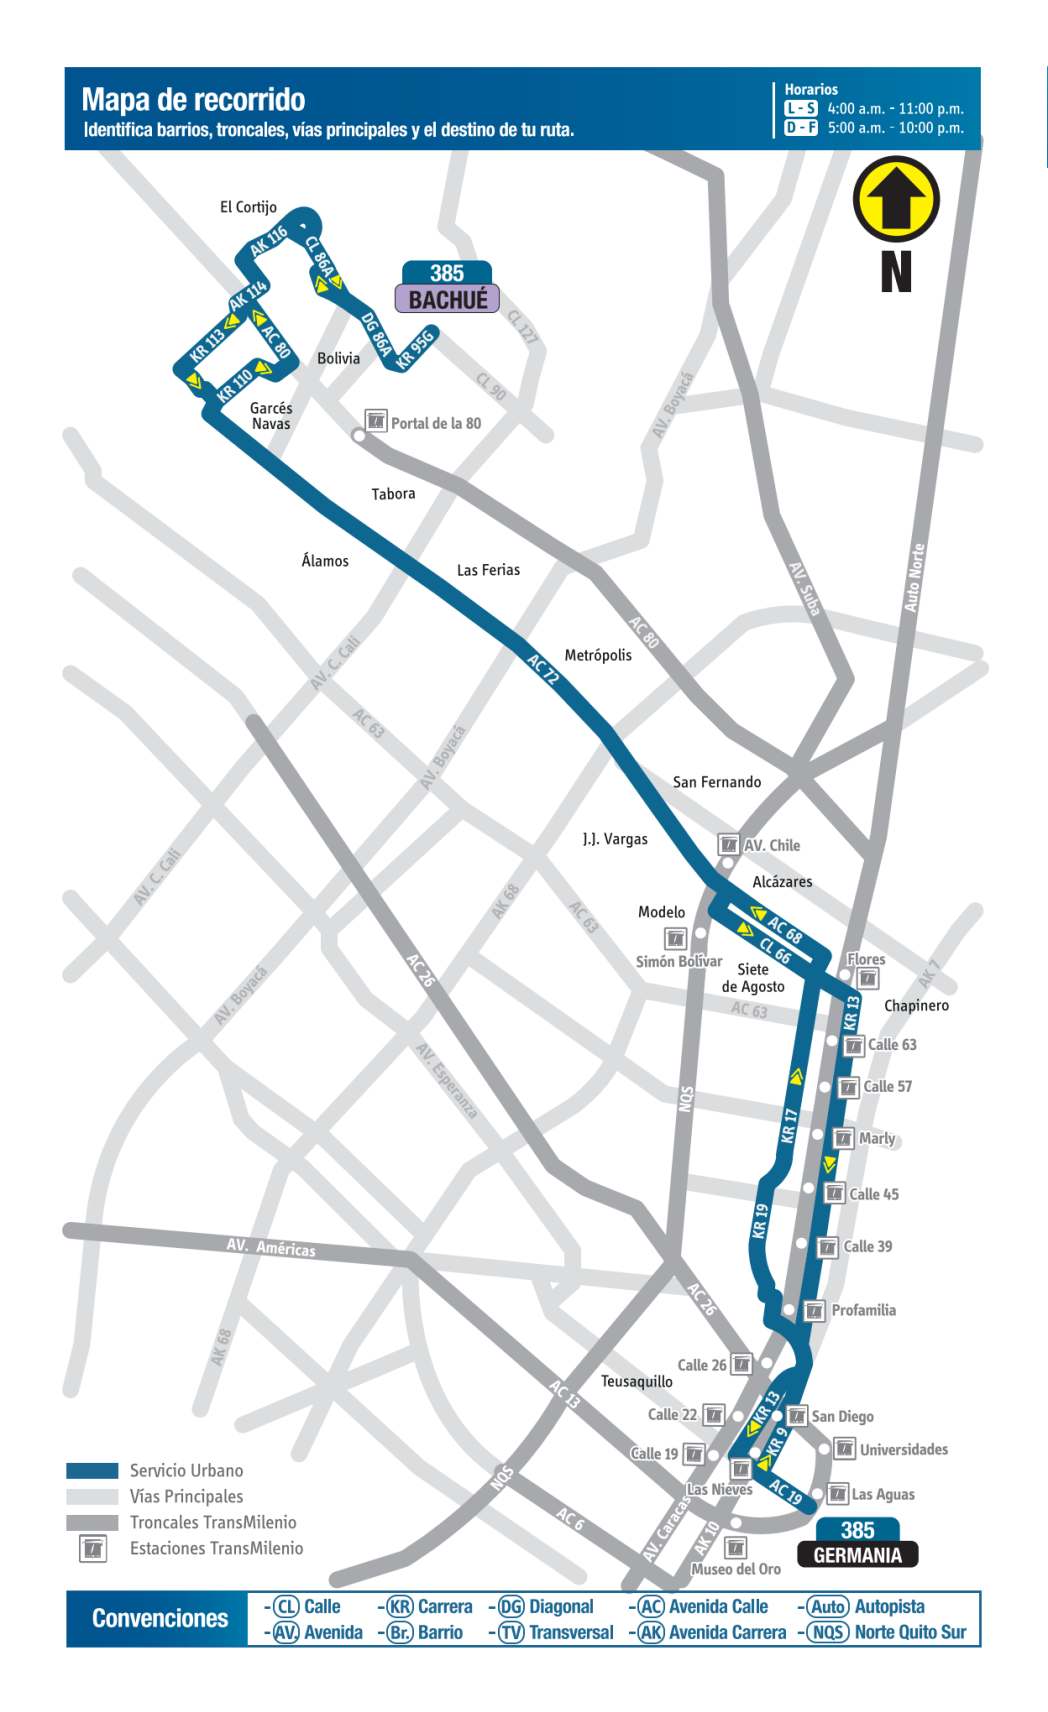 385 Bachué - Germania, mapa bus urbano Bogotá